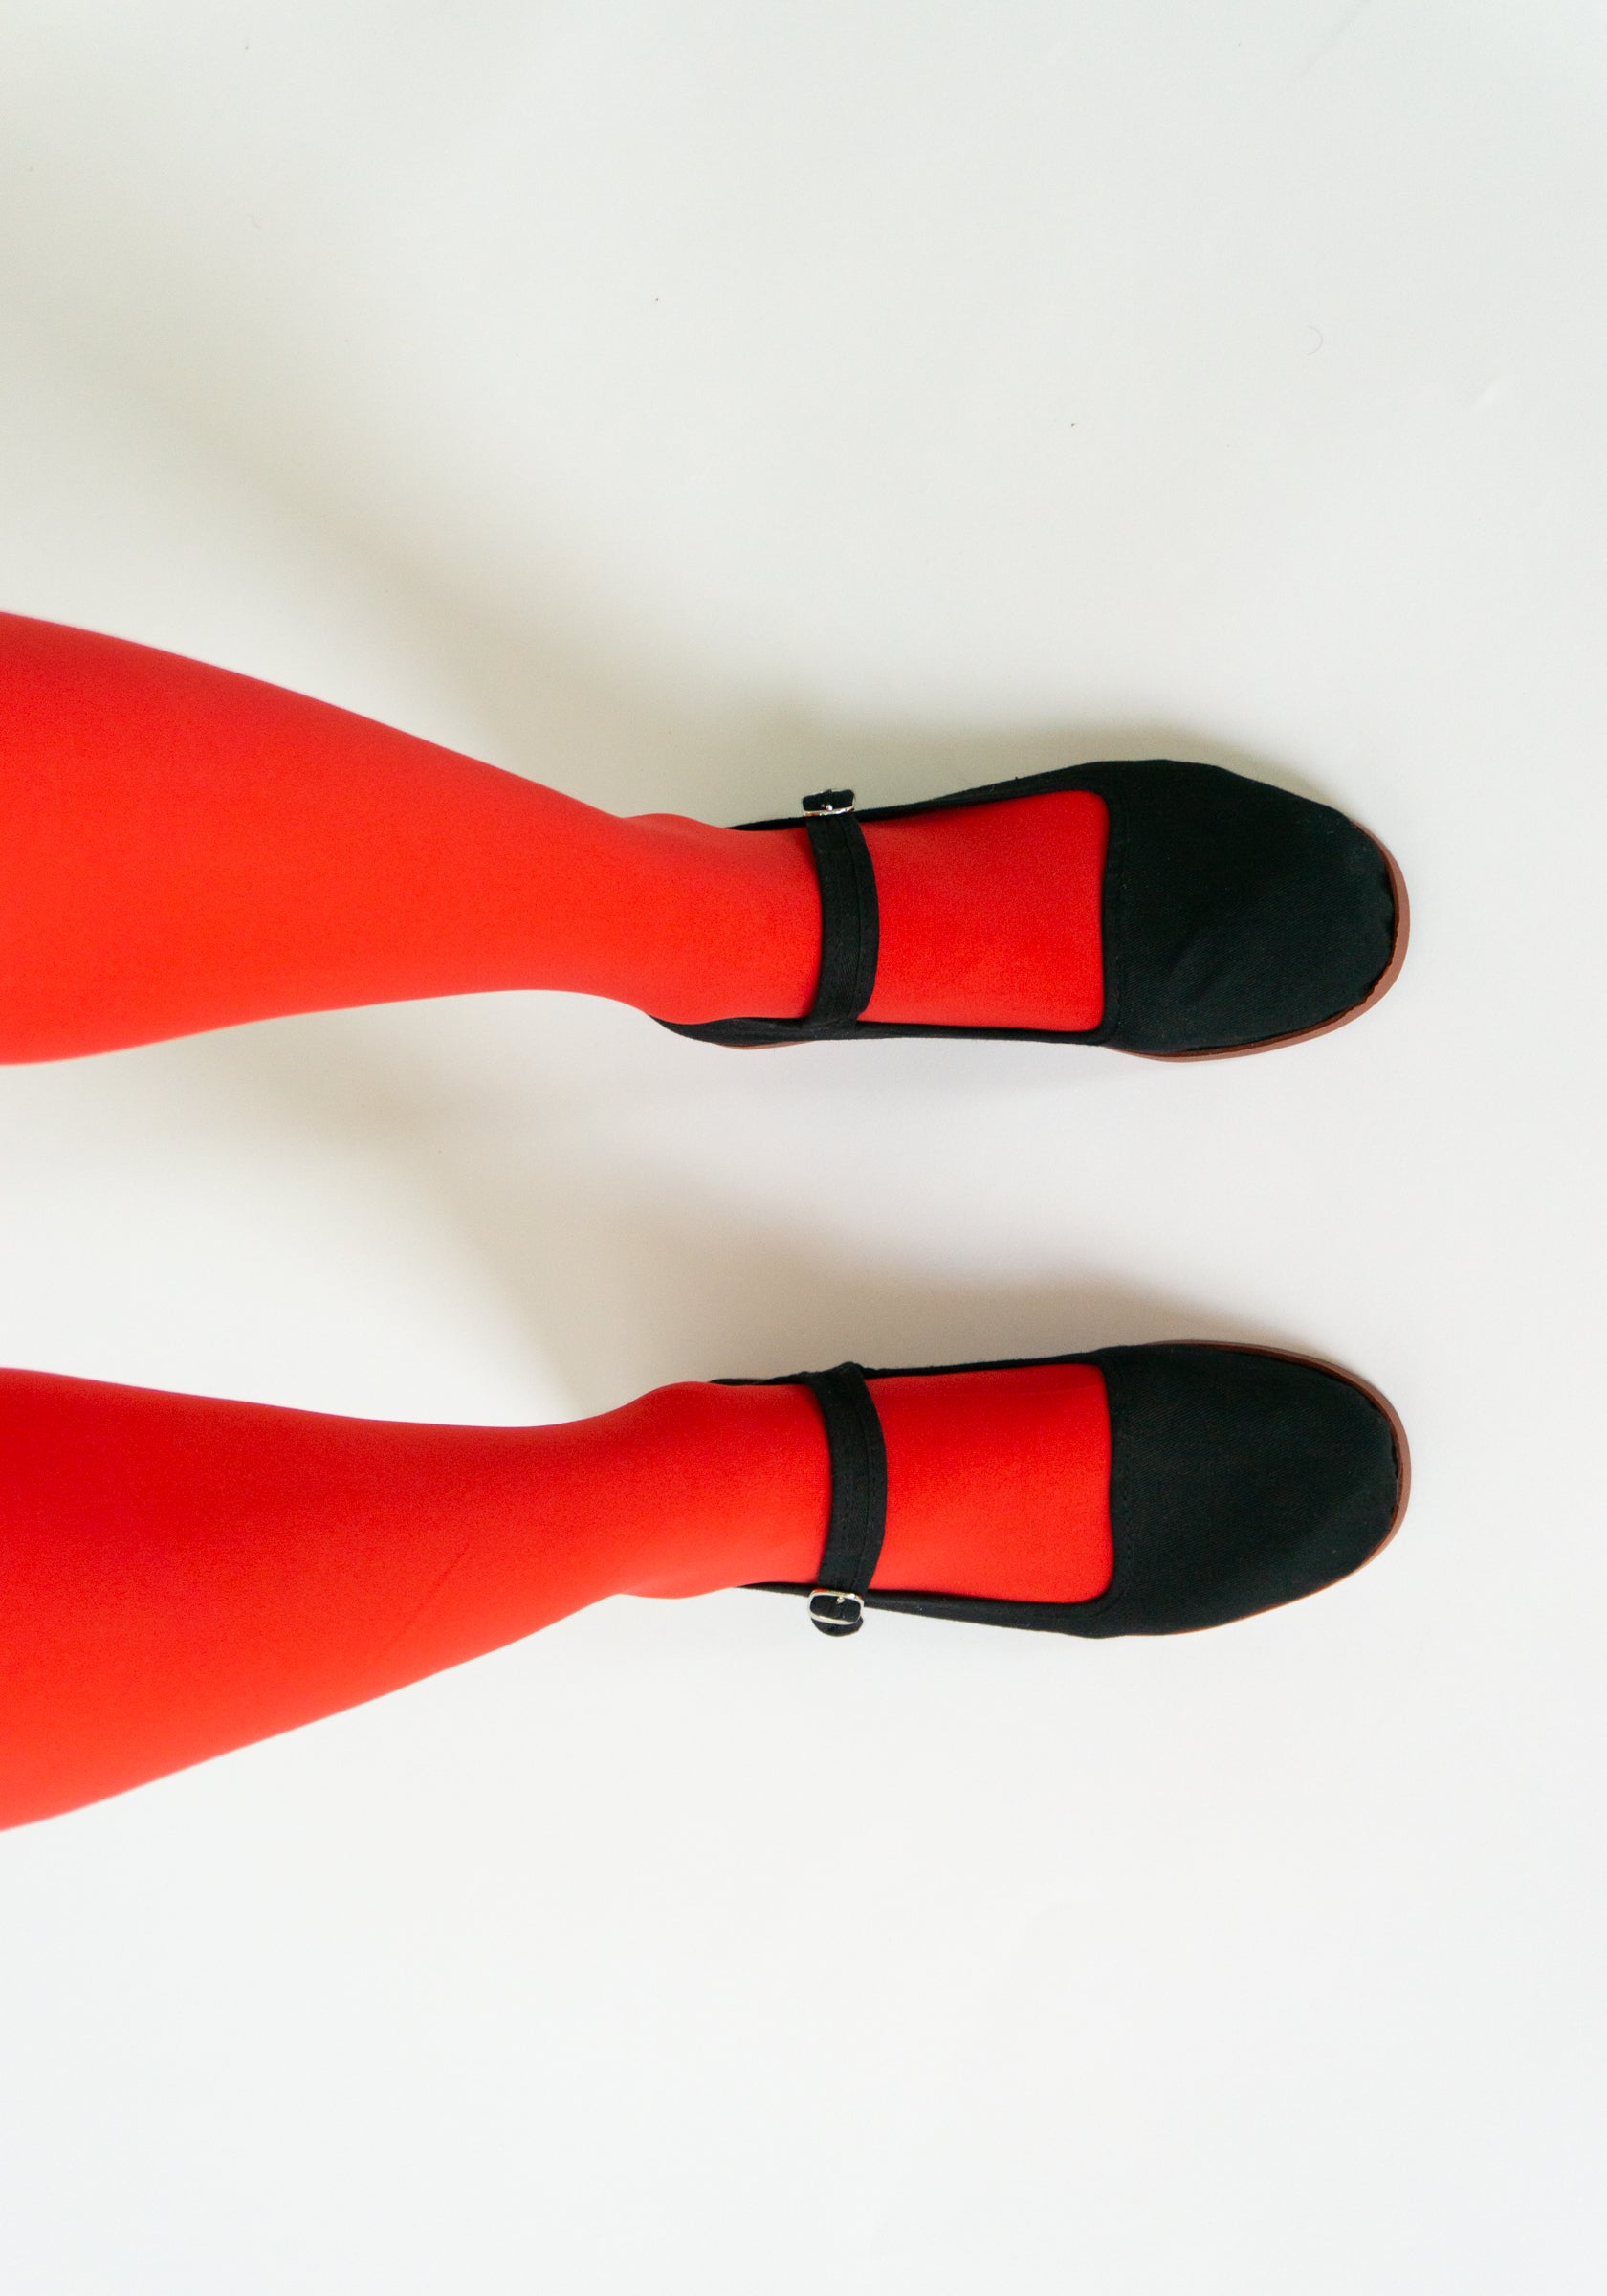 Swedish Stockings Olivia Premium Tights in Red